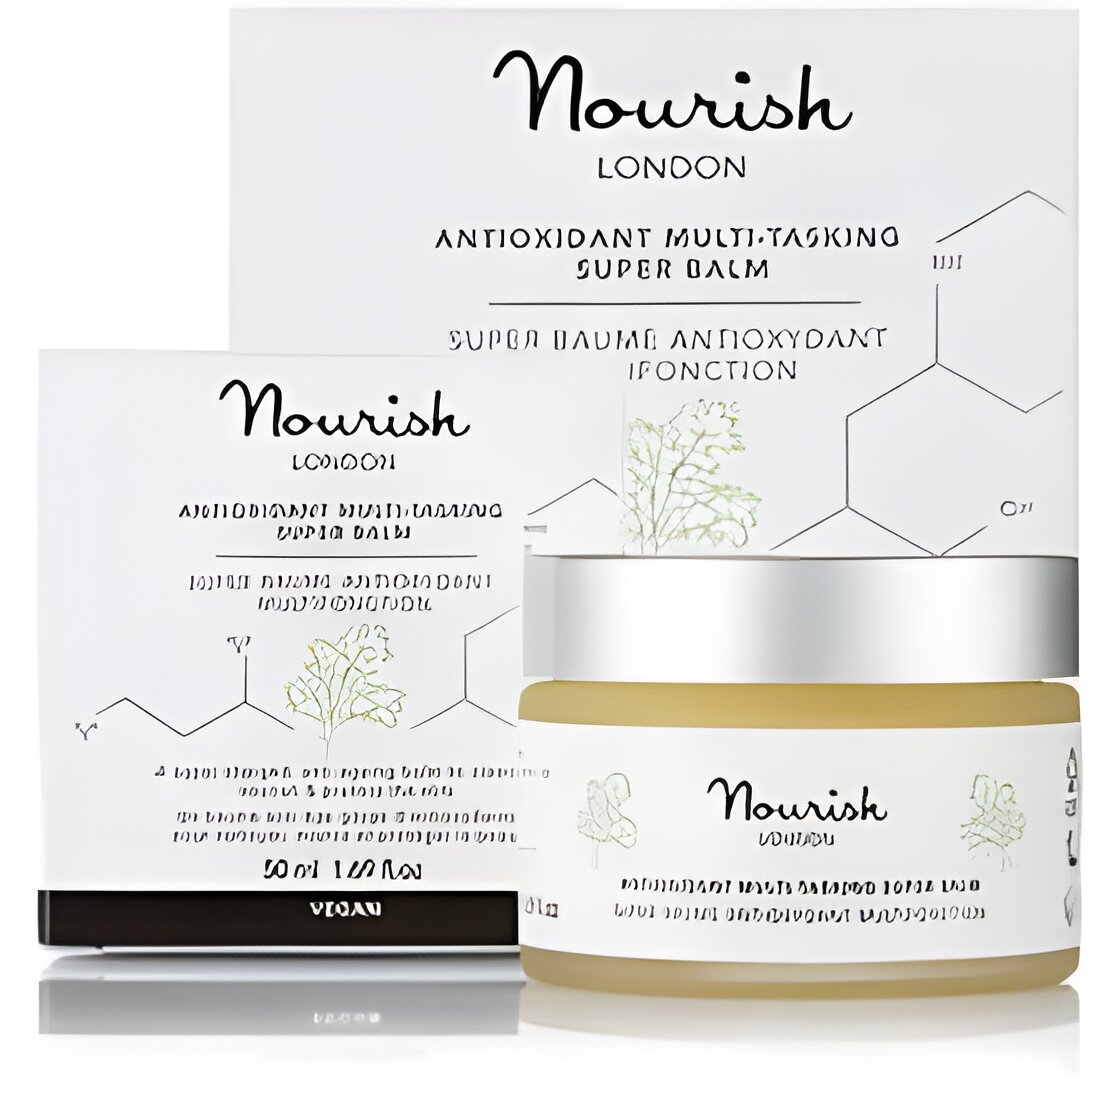 Free Nourish London's Antioxidant Multi-Tasking Superbalm